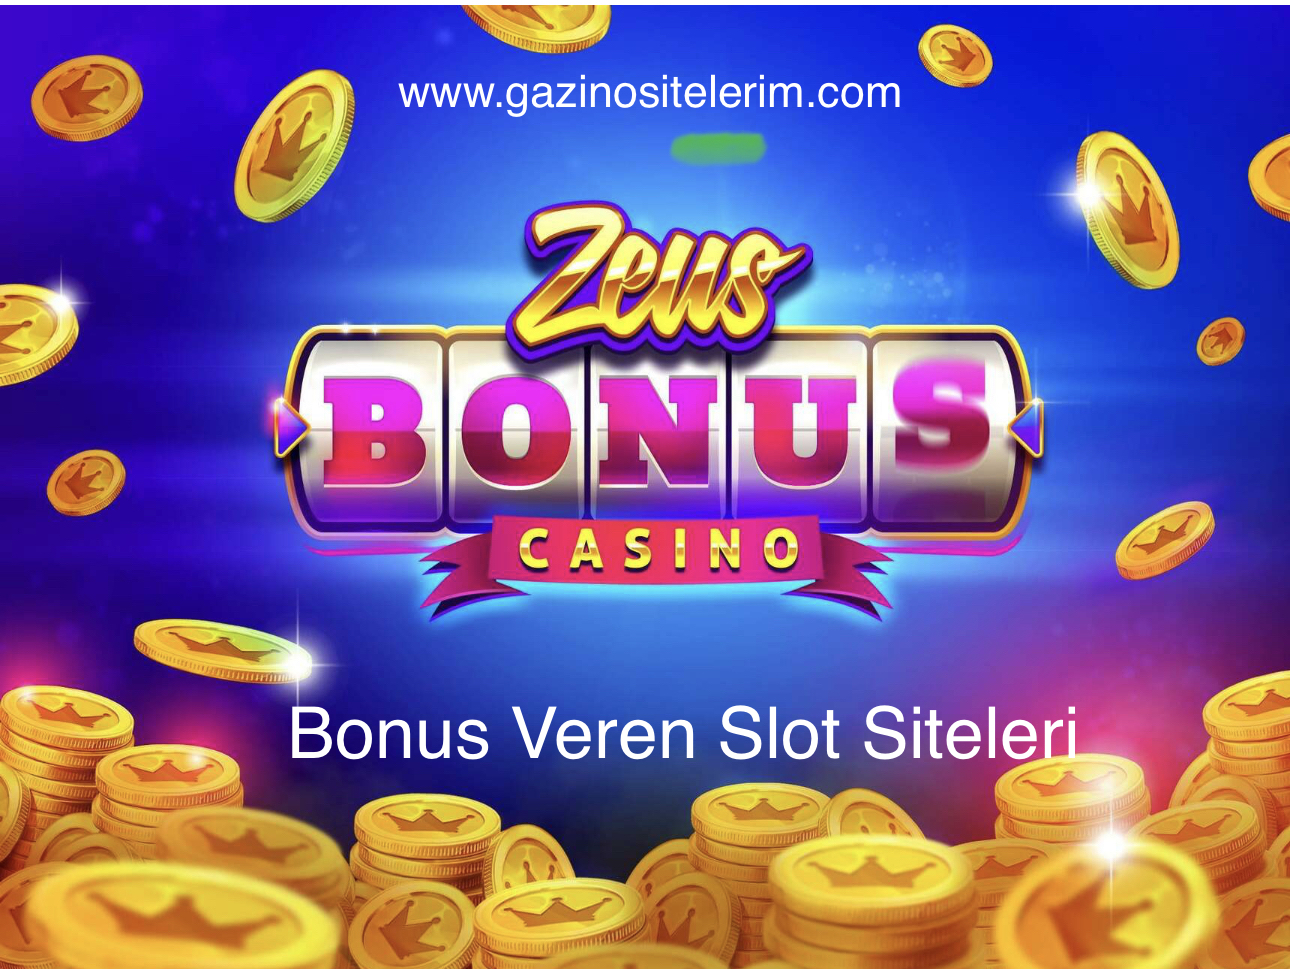 Bonus Veren Slot Siteleri www.gazinositelerim.com